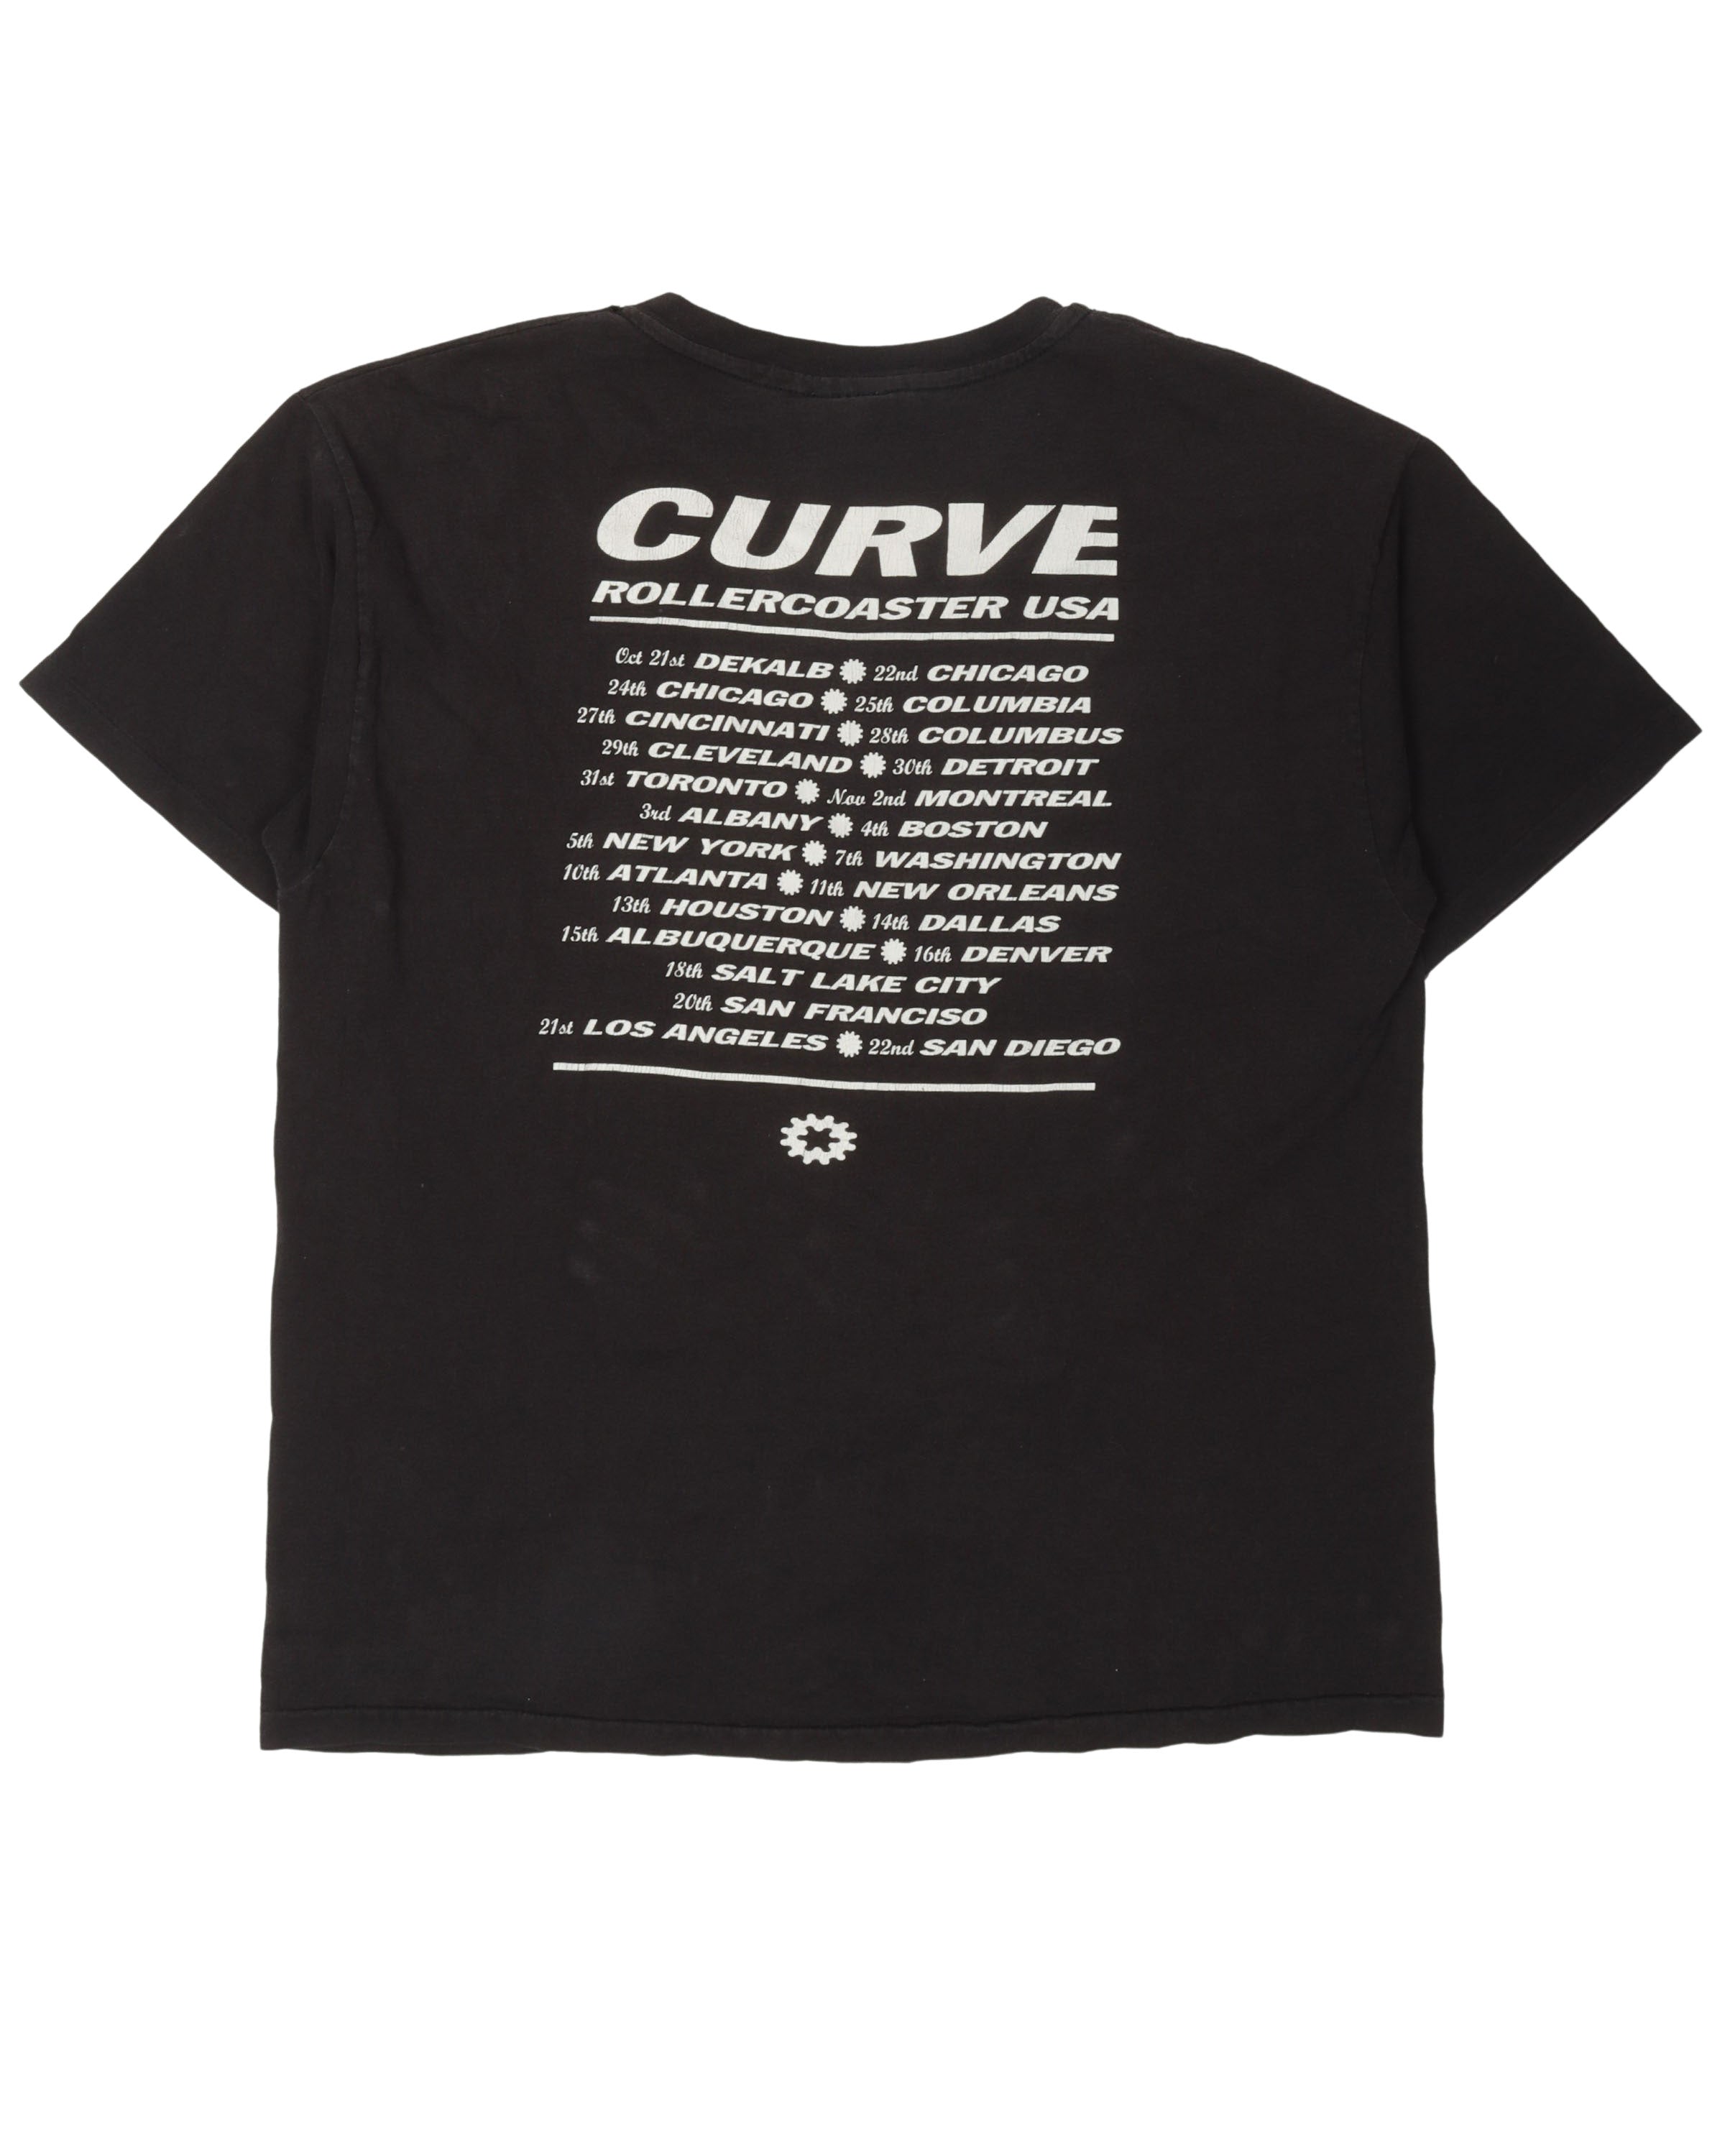 Curve Rollercoaster USA Tour T-Shirt